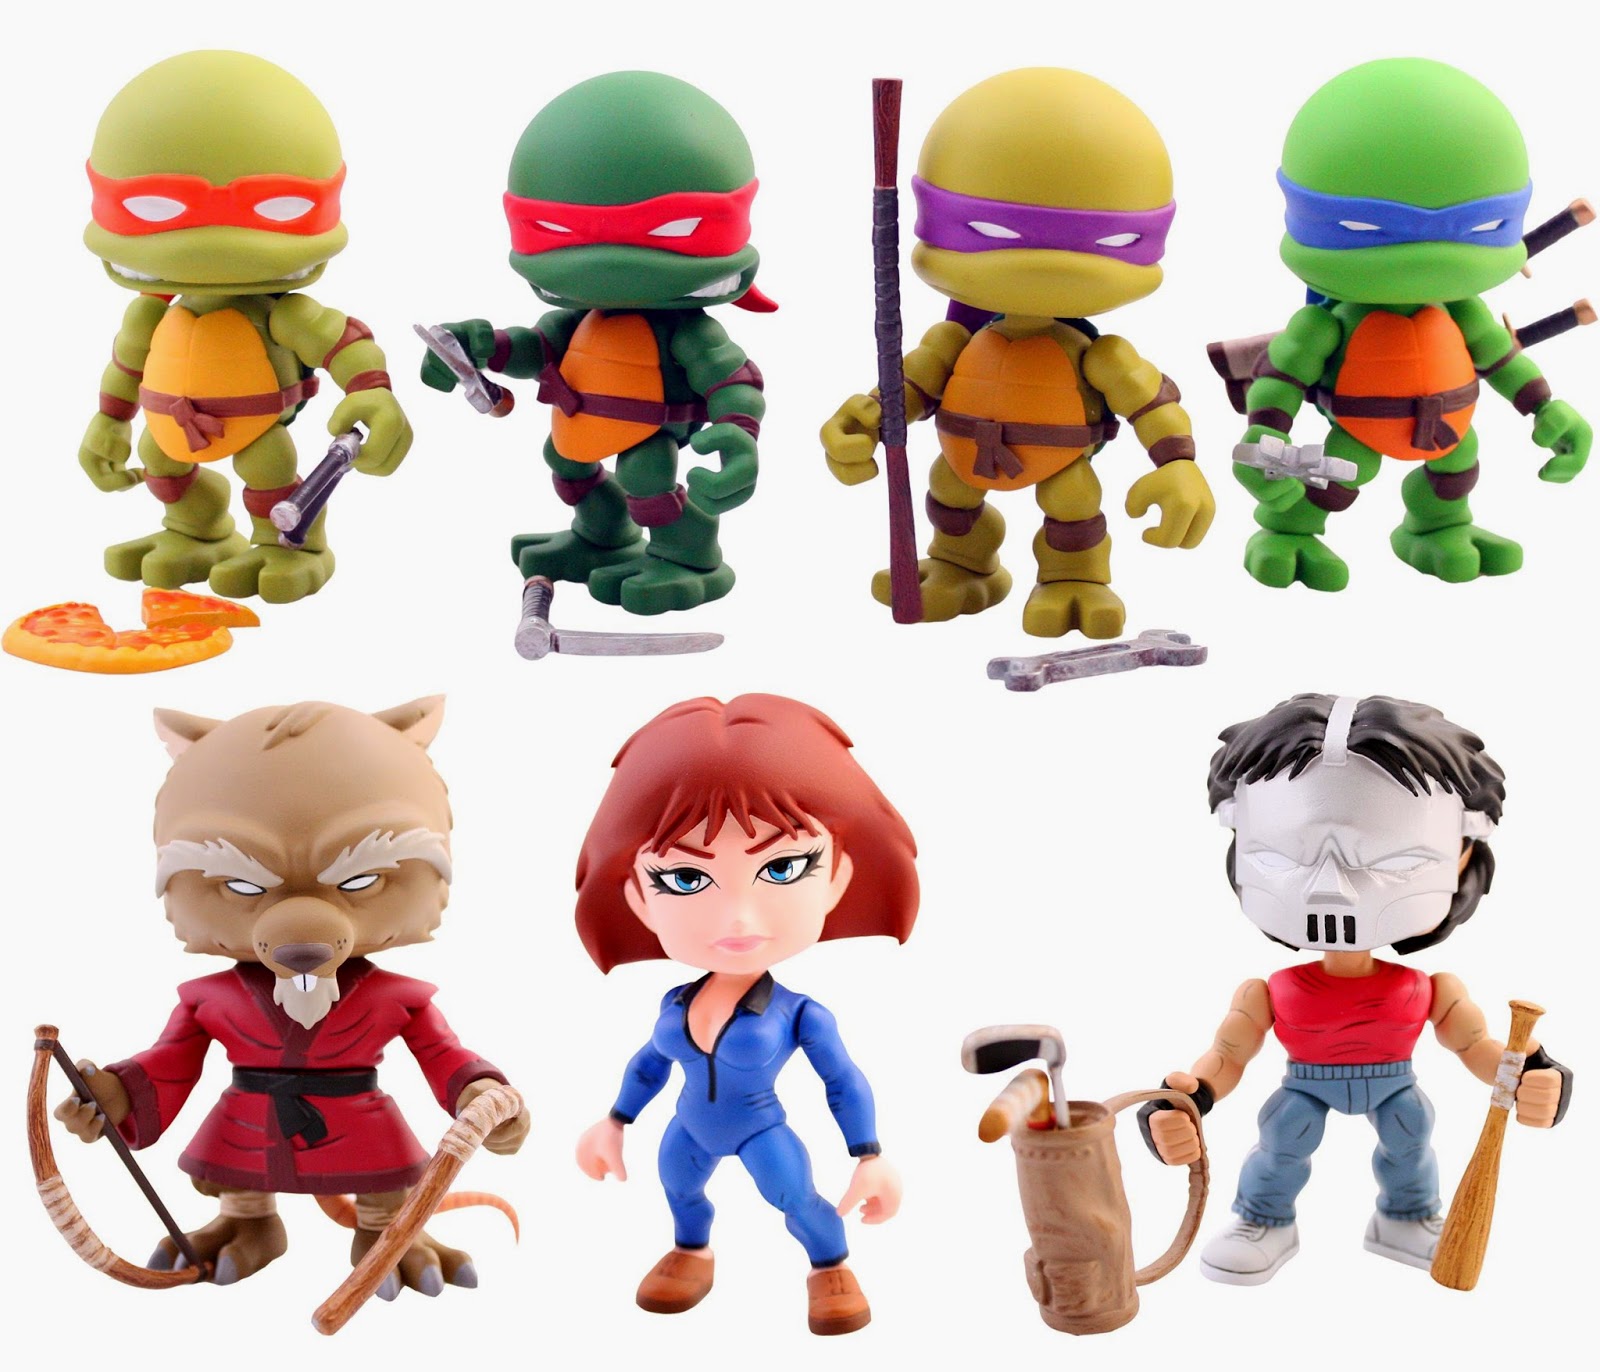 Teenage Mutant Ninja Turtles Mini Figure Series by The Loyal Subjects - Michelangelo, Raphael, Donatello, & Leonardo, Splinter, April O'Neal & Casey Jones